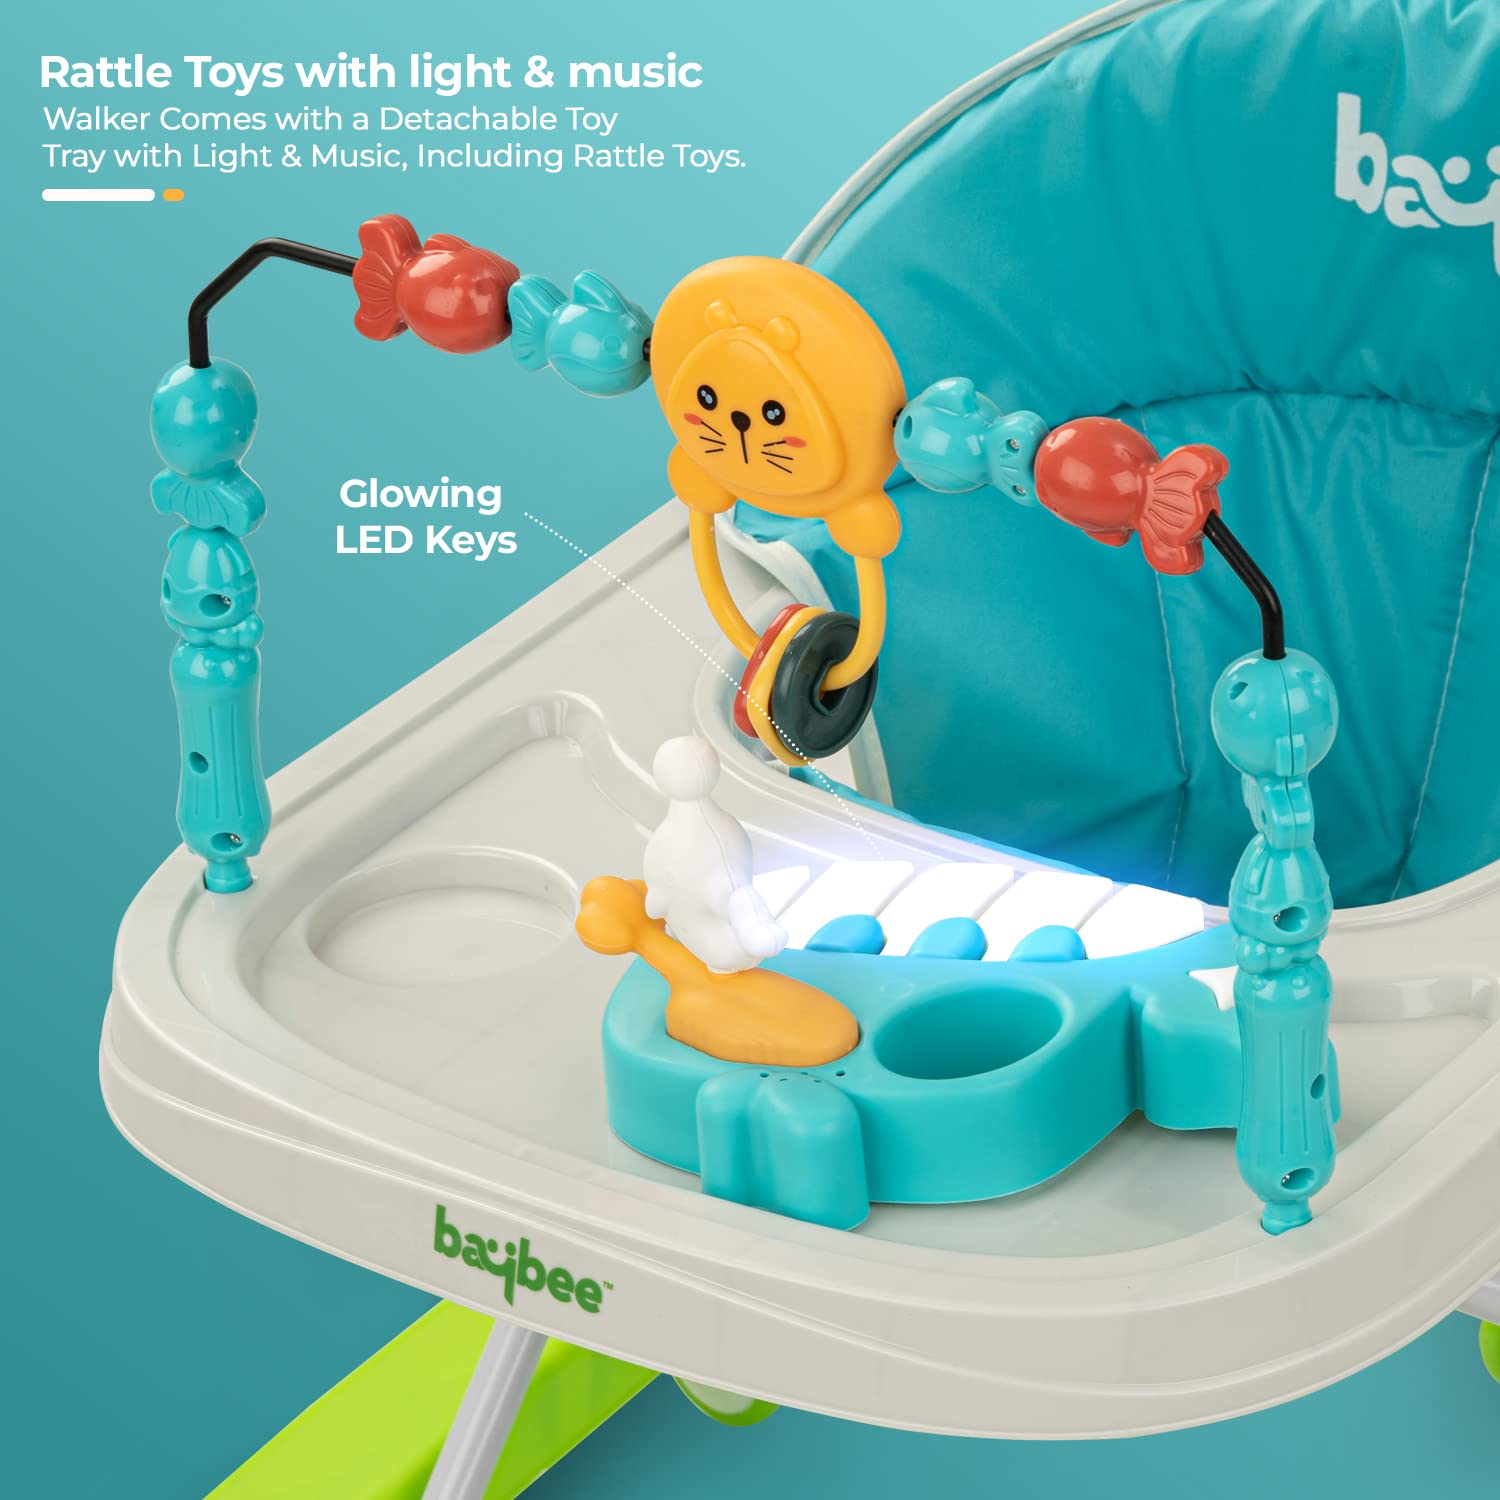 Minikin Nexus Baby Walker I Parental Control Handle I 2 Step Height Adjustment I Anti-Rollover Design I Musical Toy Bar I 6M - 24M